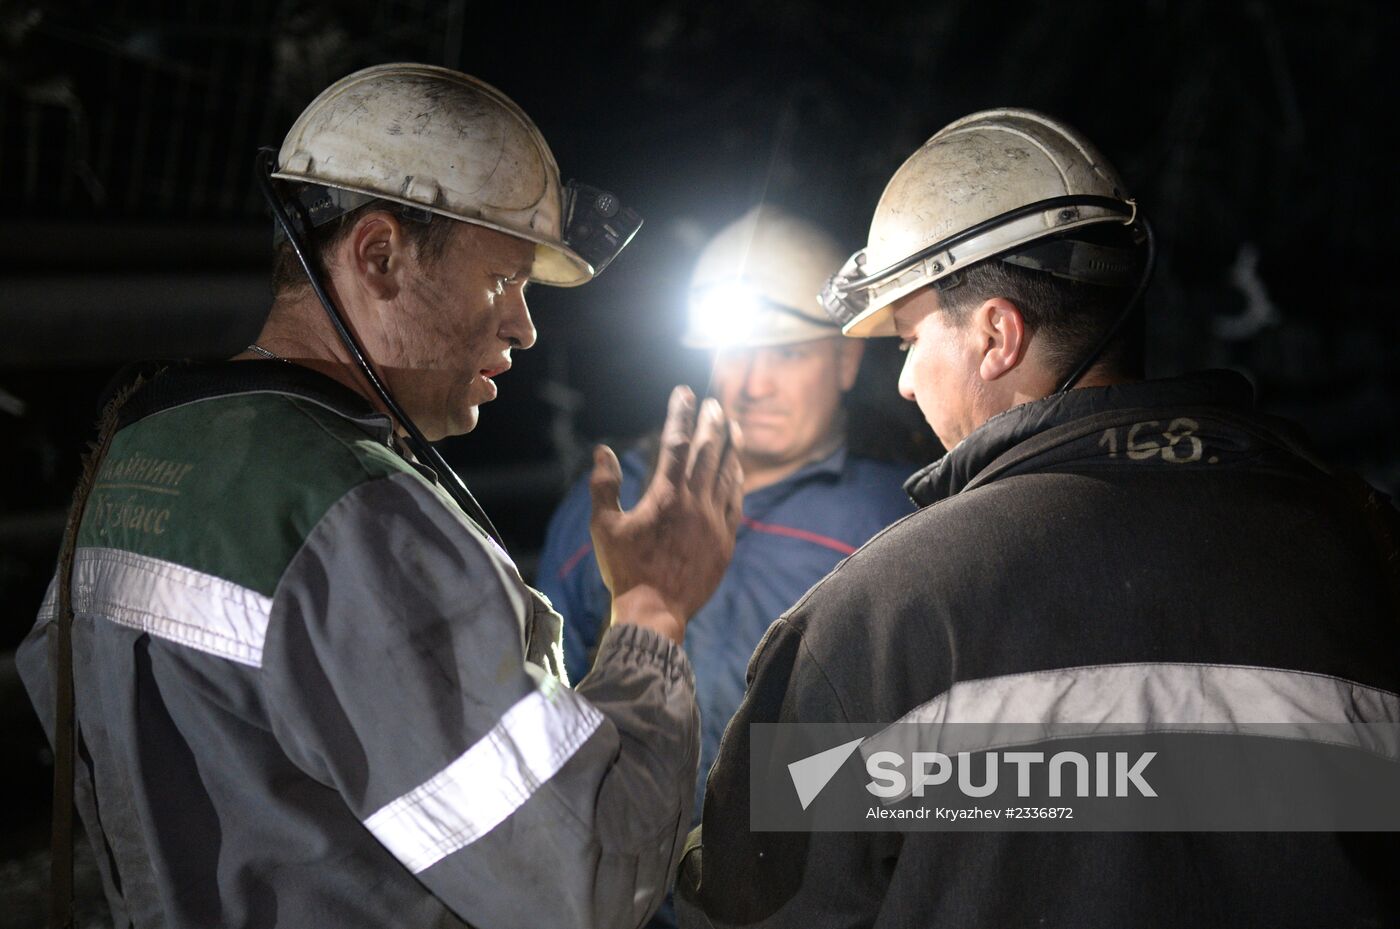 Sibirginskaya mine in Kemerovo region